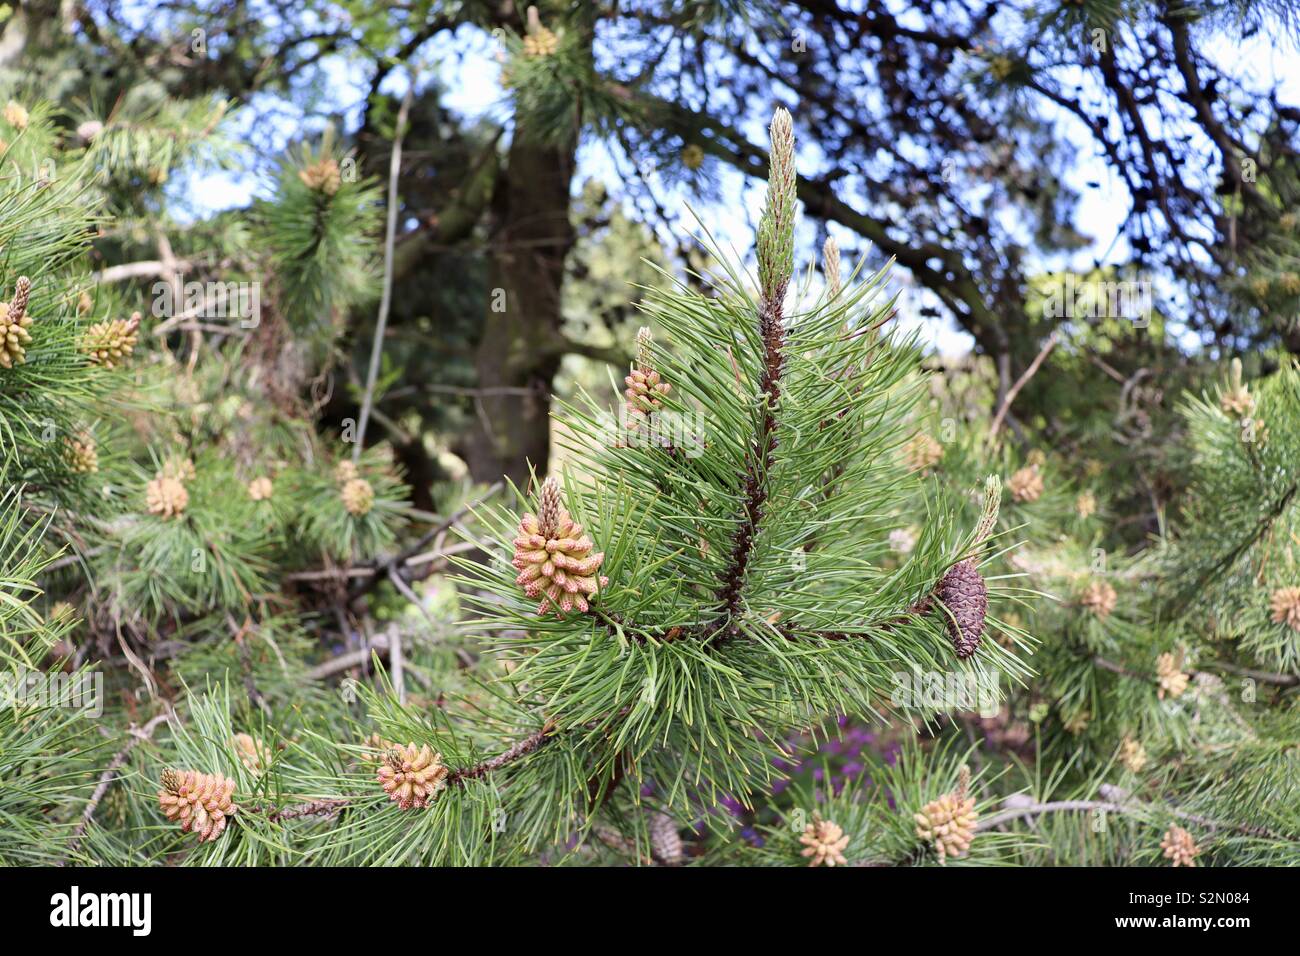 Pine cones on tree branches Stock Photo